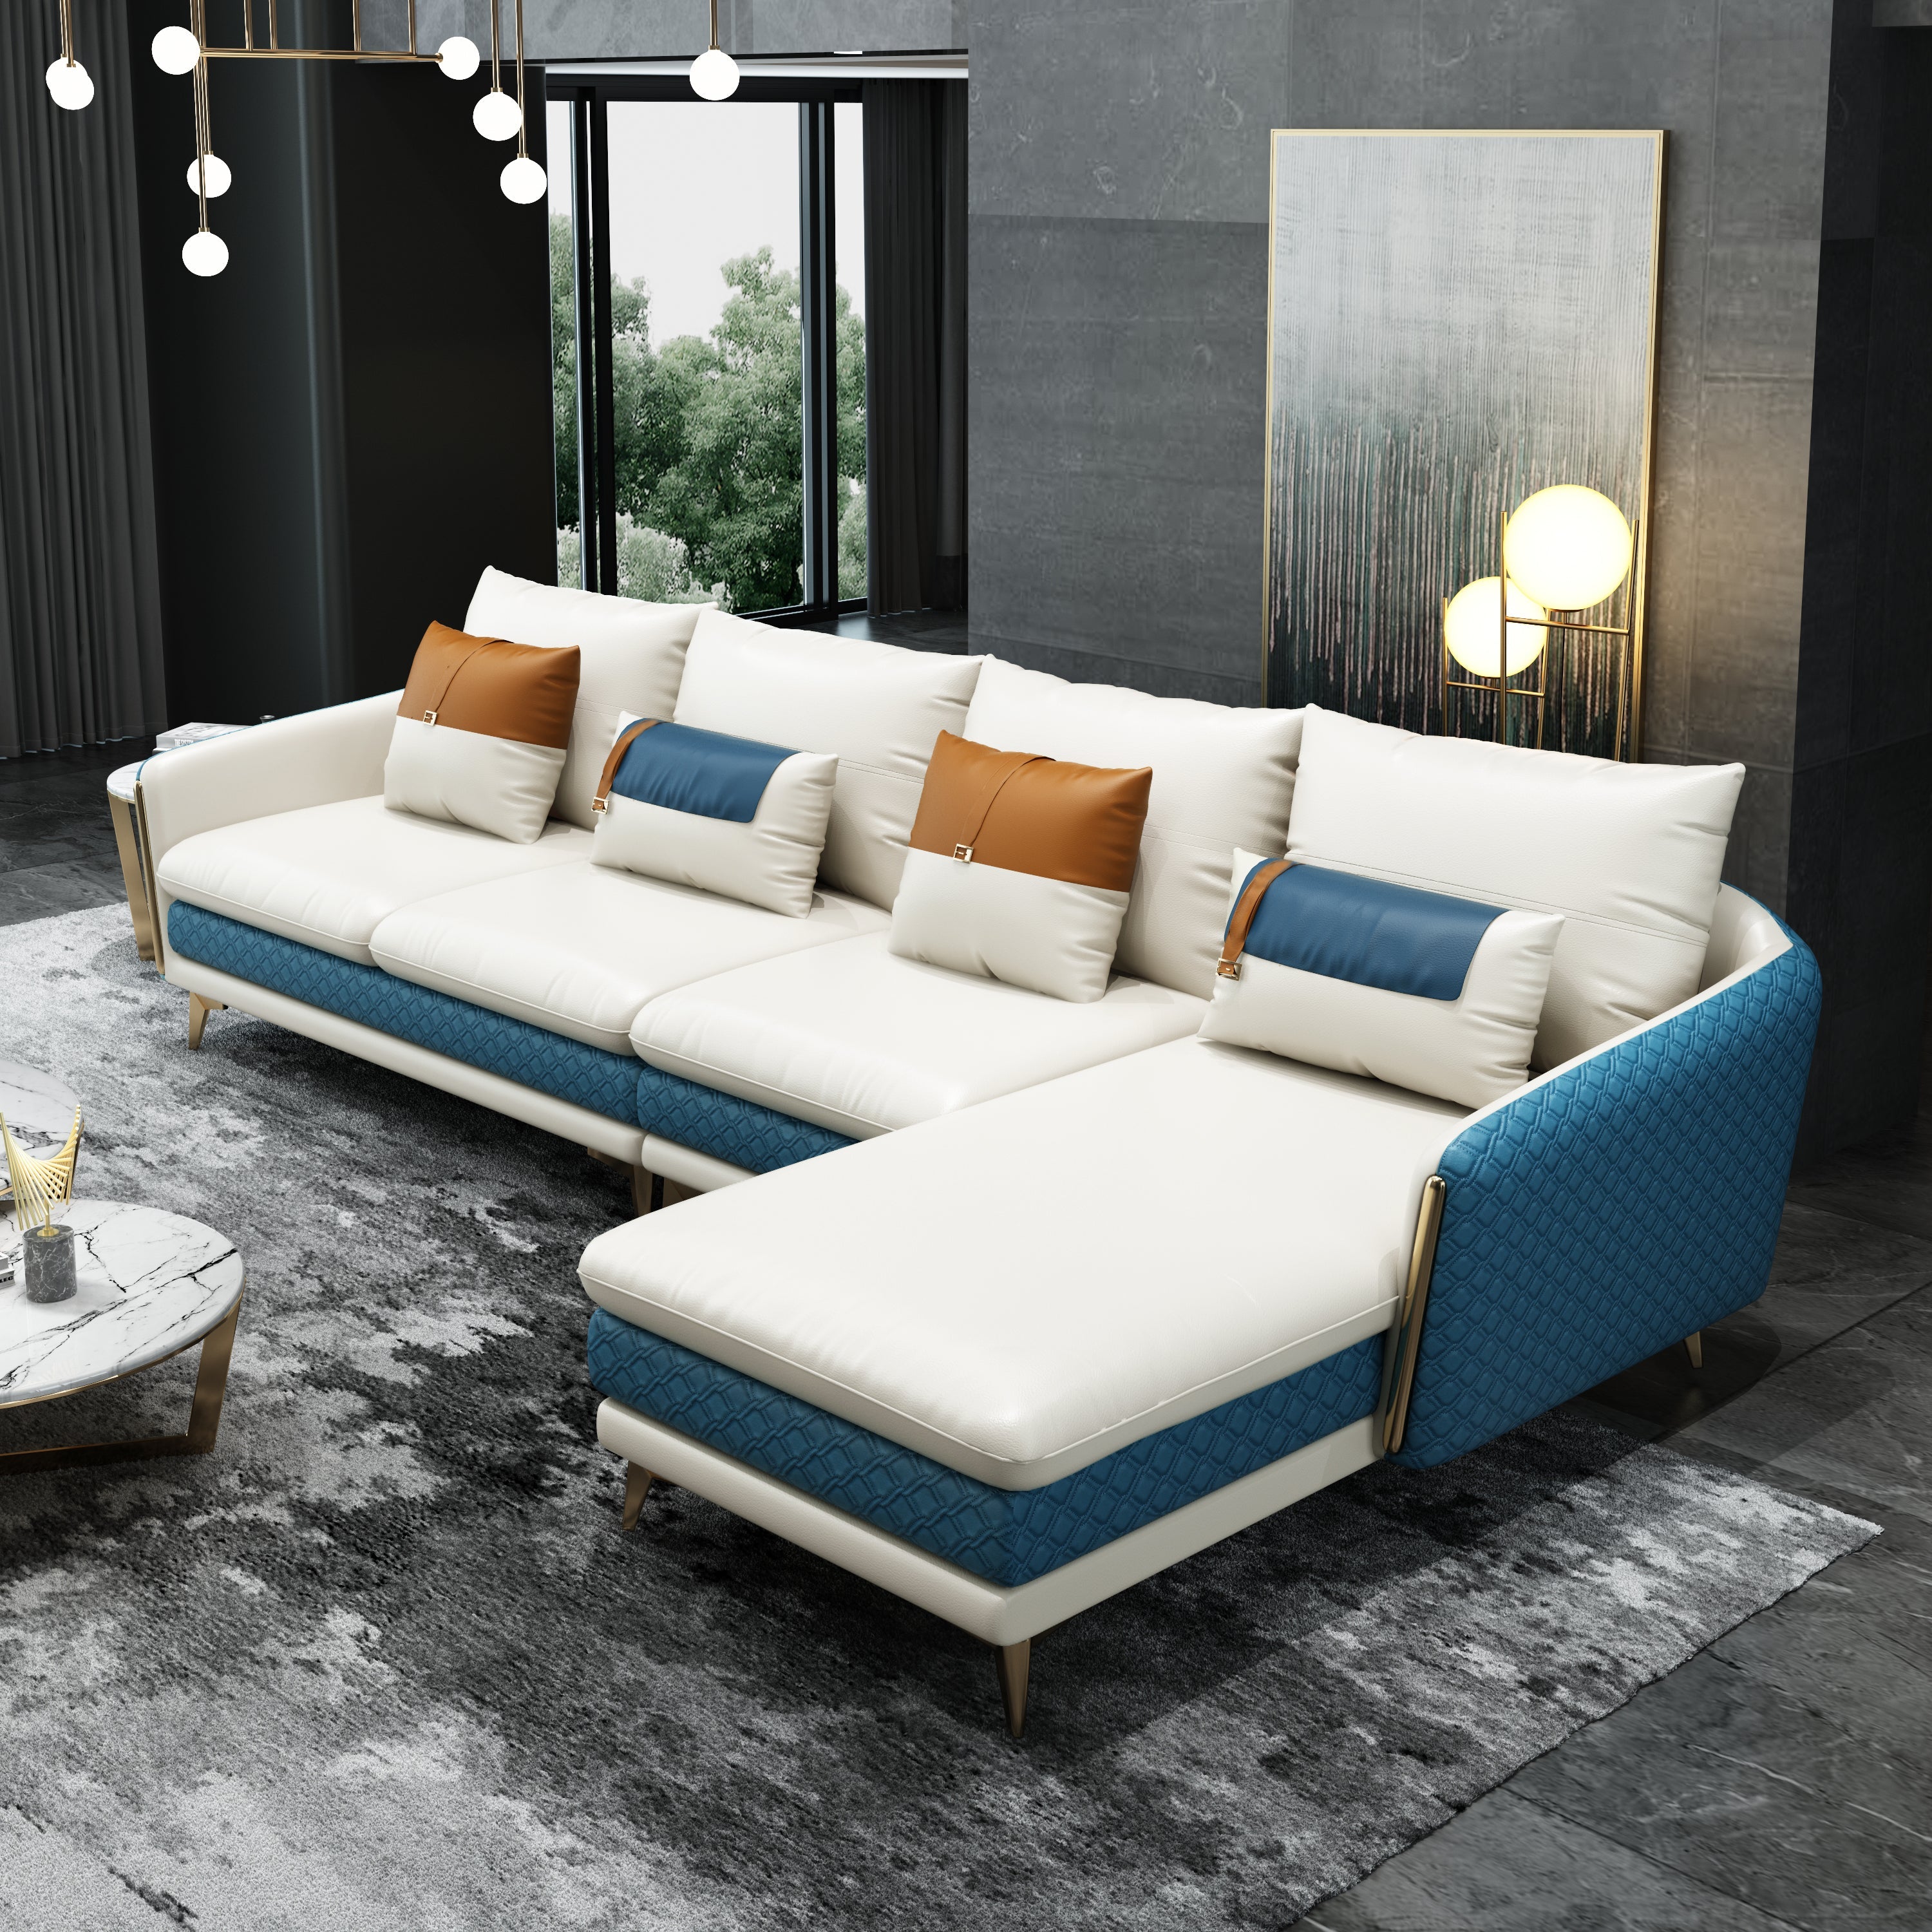 European Furniture - Icaro Sectional RHF White-Blue Italian Leather - EF-64439R-4RHF - New Star Living